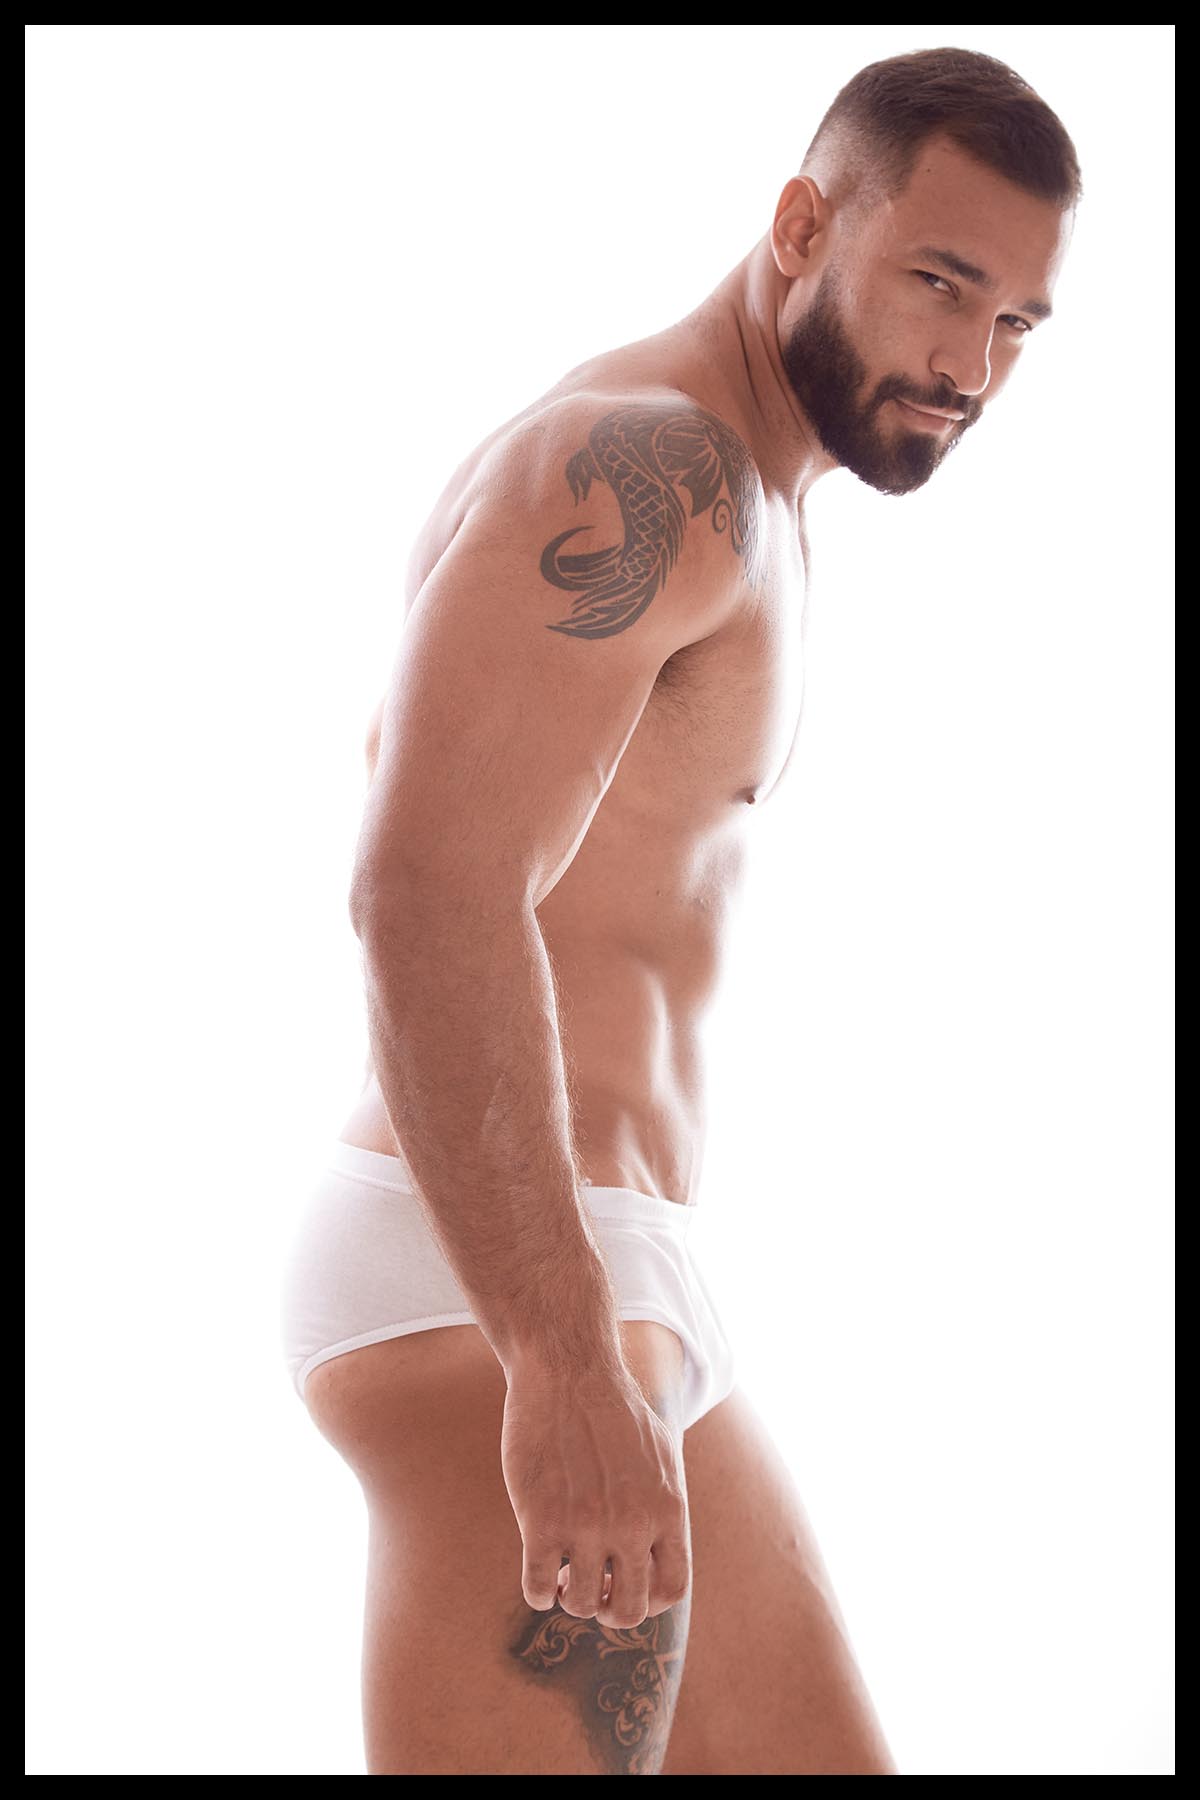 Bruno Mooneyhan by Pedro Fonseca for Brazilian Male Model 4 - 巴西硬汉男模 Bruno Mooneyhan / Pedro Fonseca摄影作品